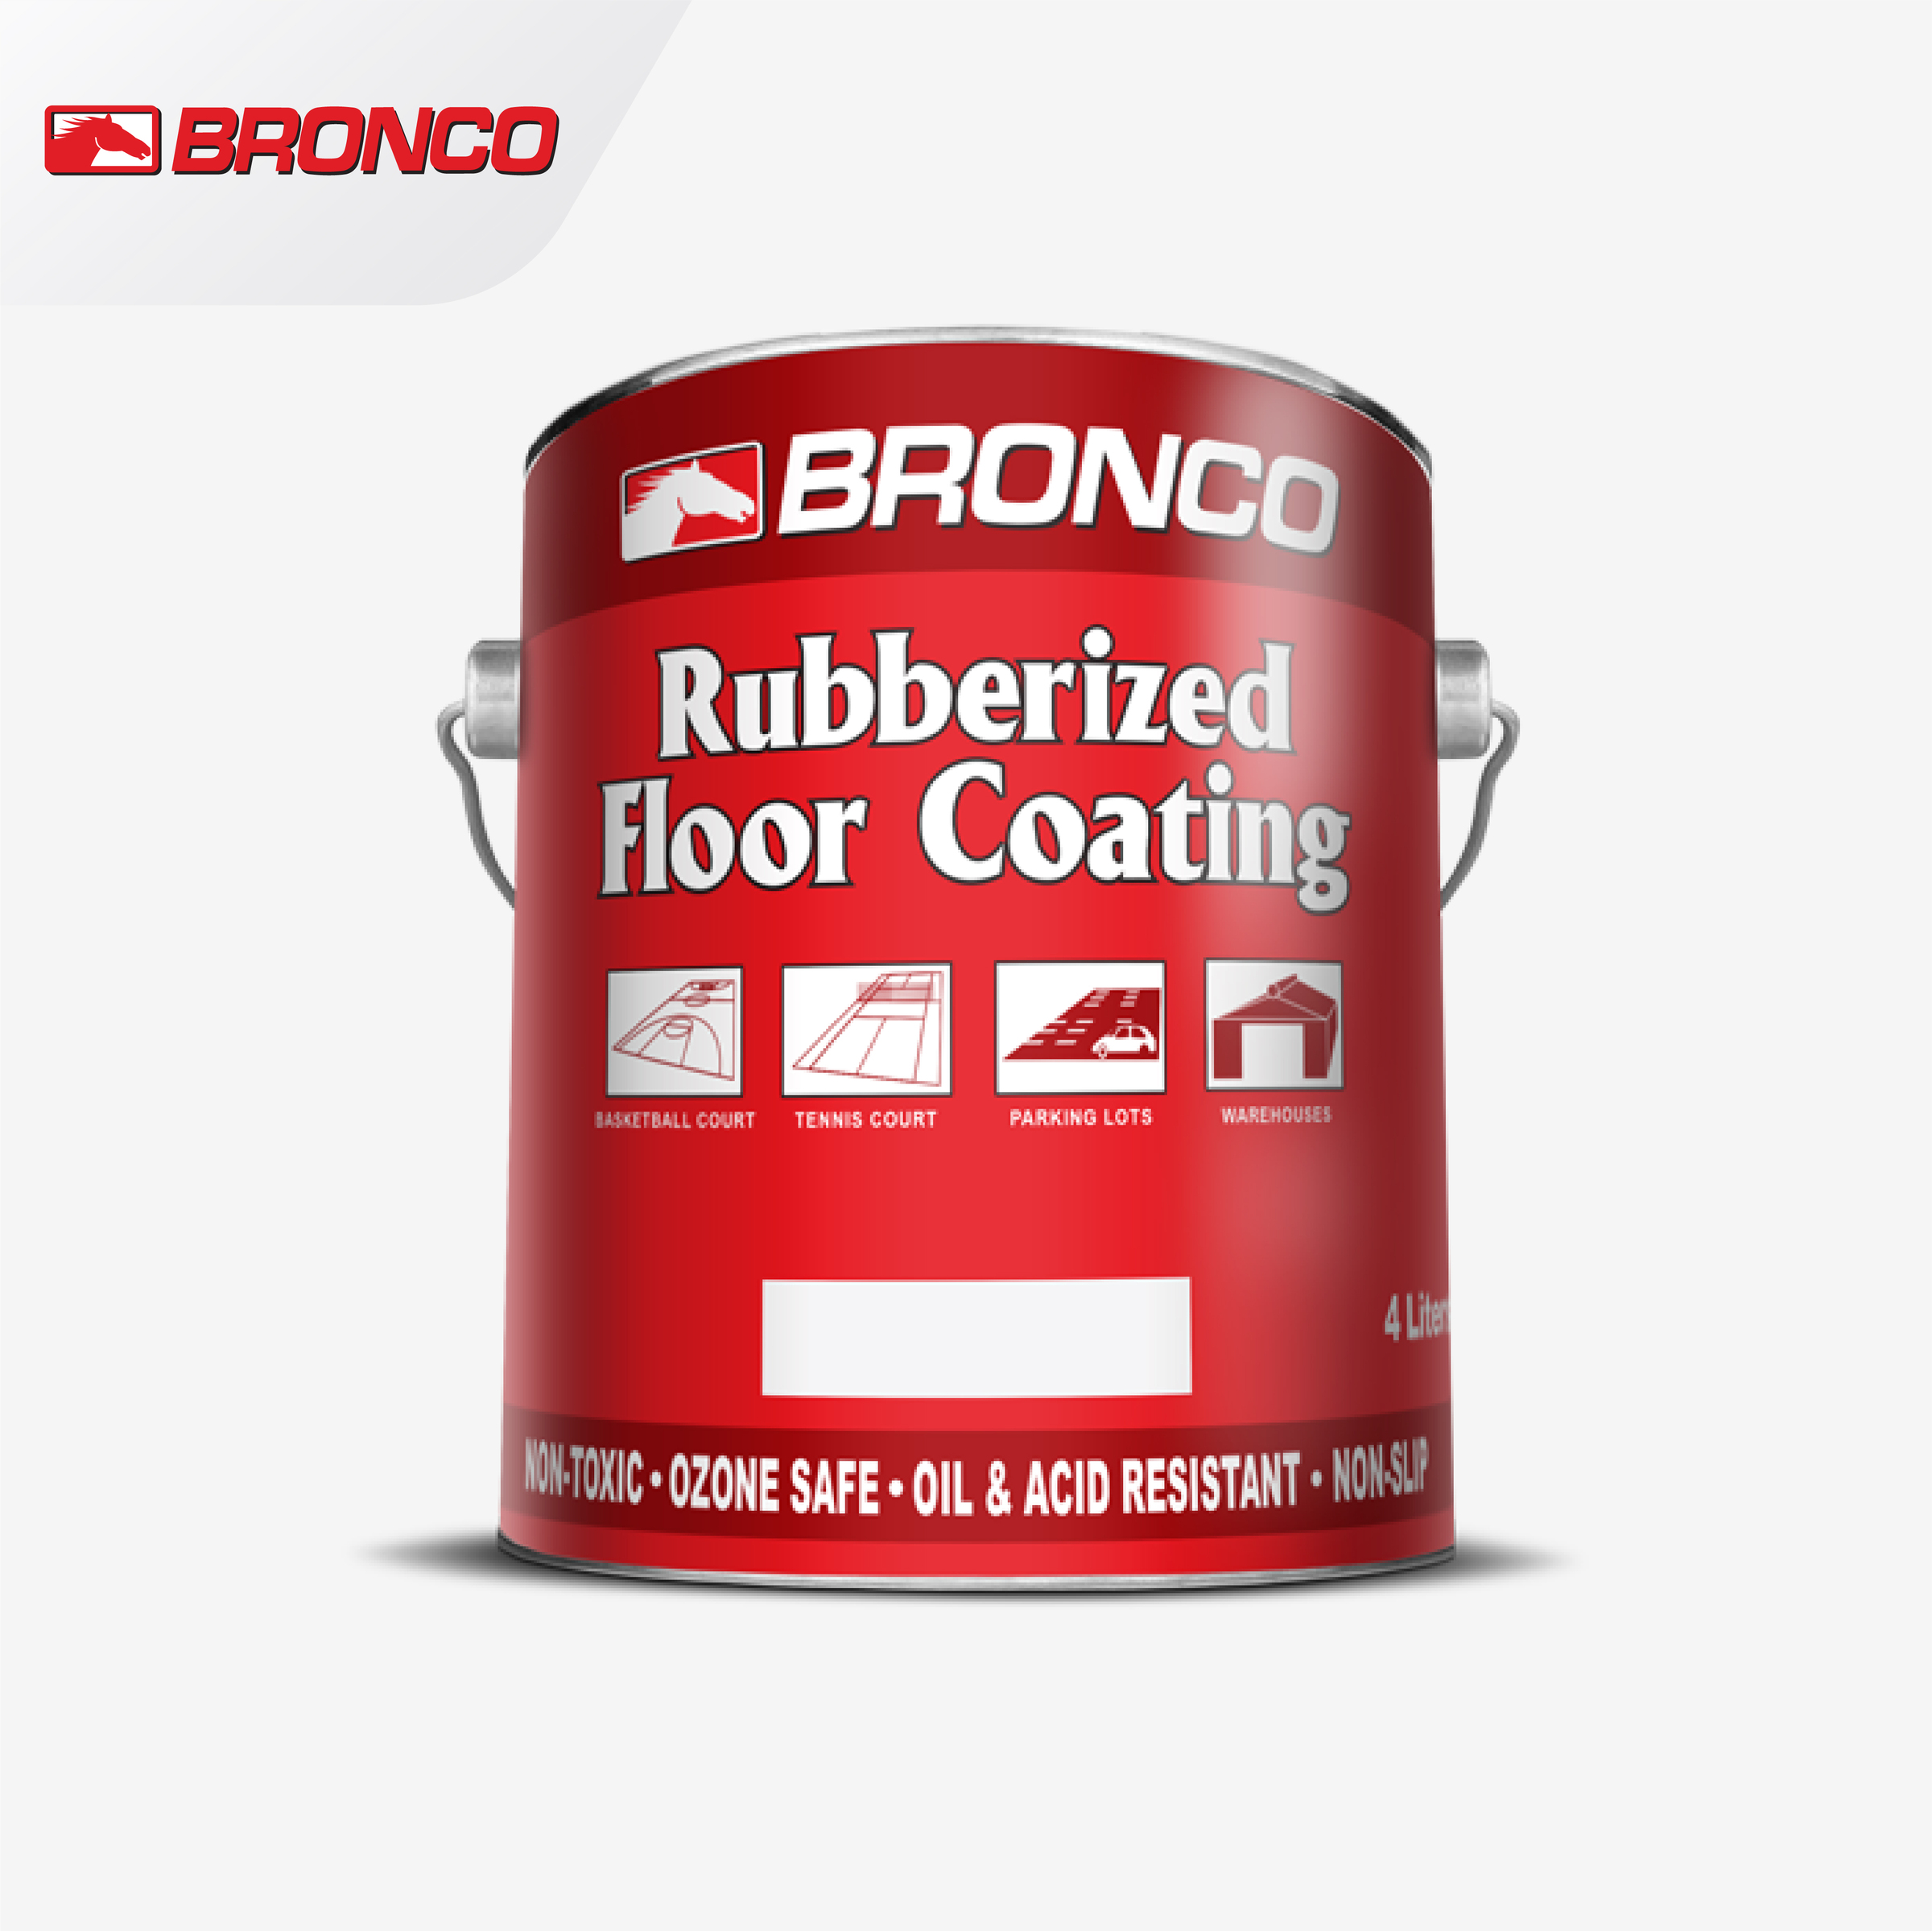 Bronco Rubberized Floor Coating